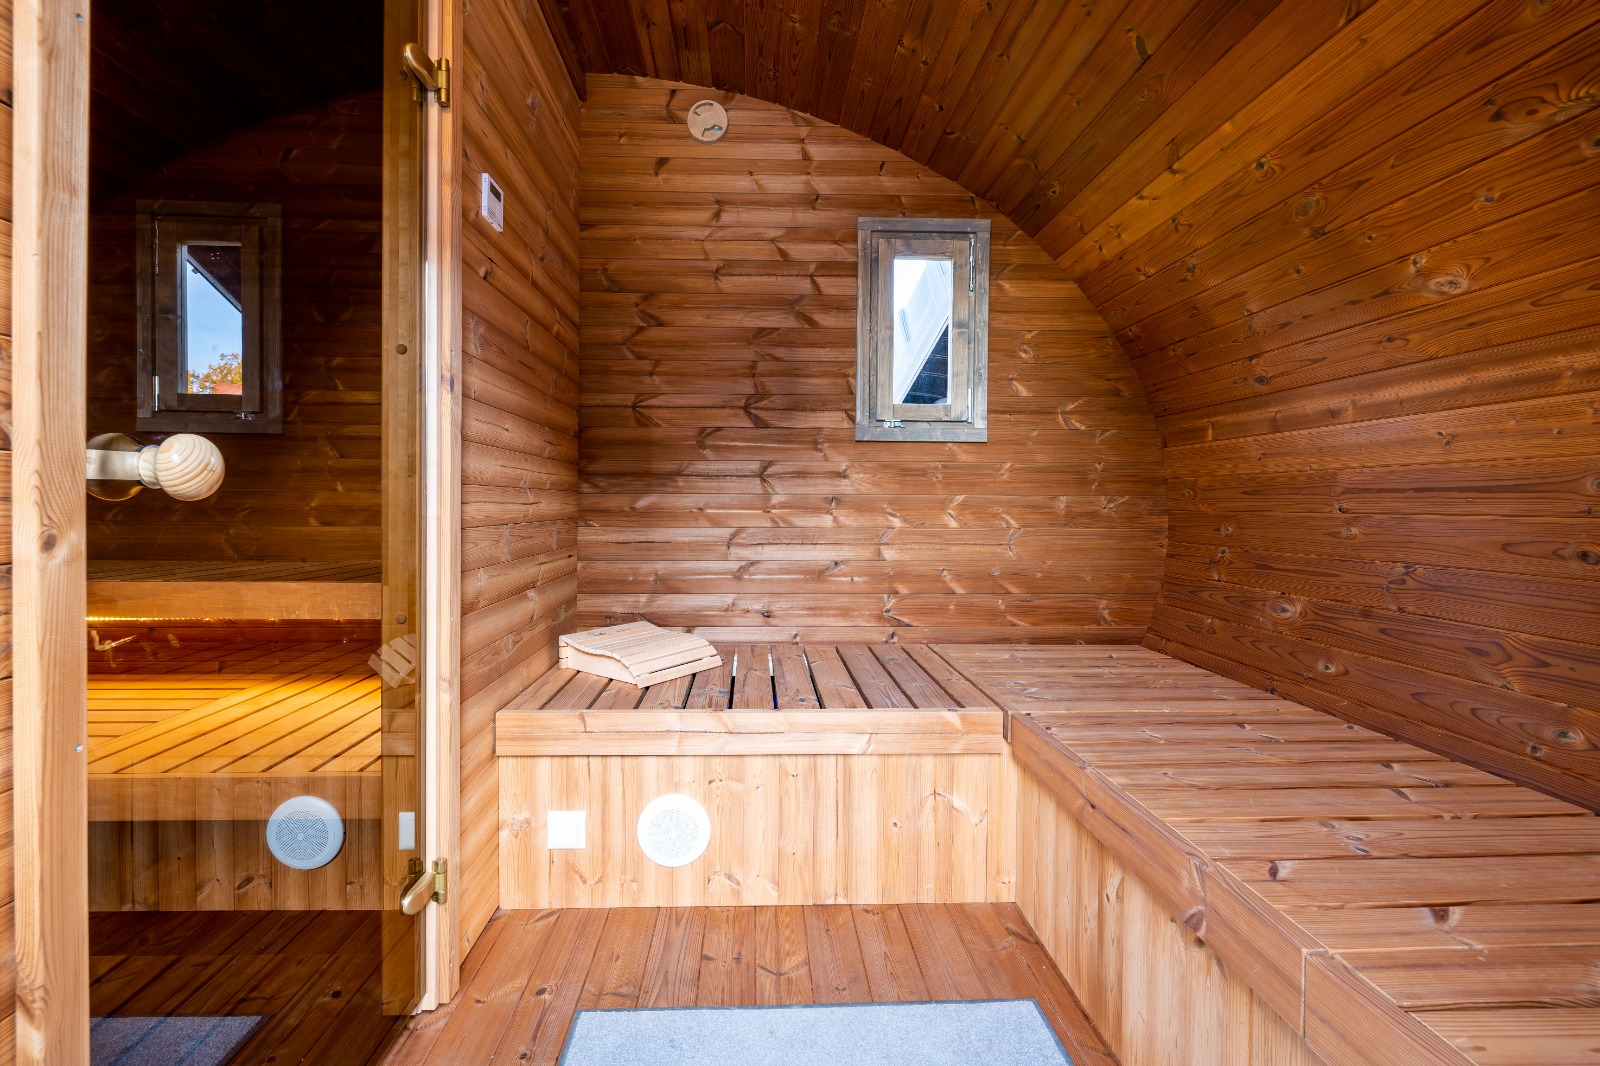 Neptune Saunas Blog - How to Sauna - Interior of reykjavik 2-room sauna